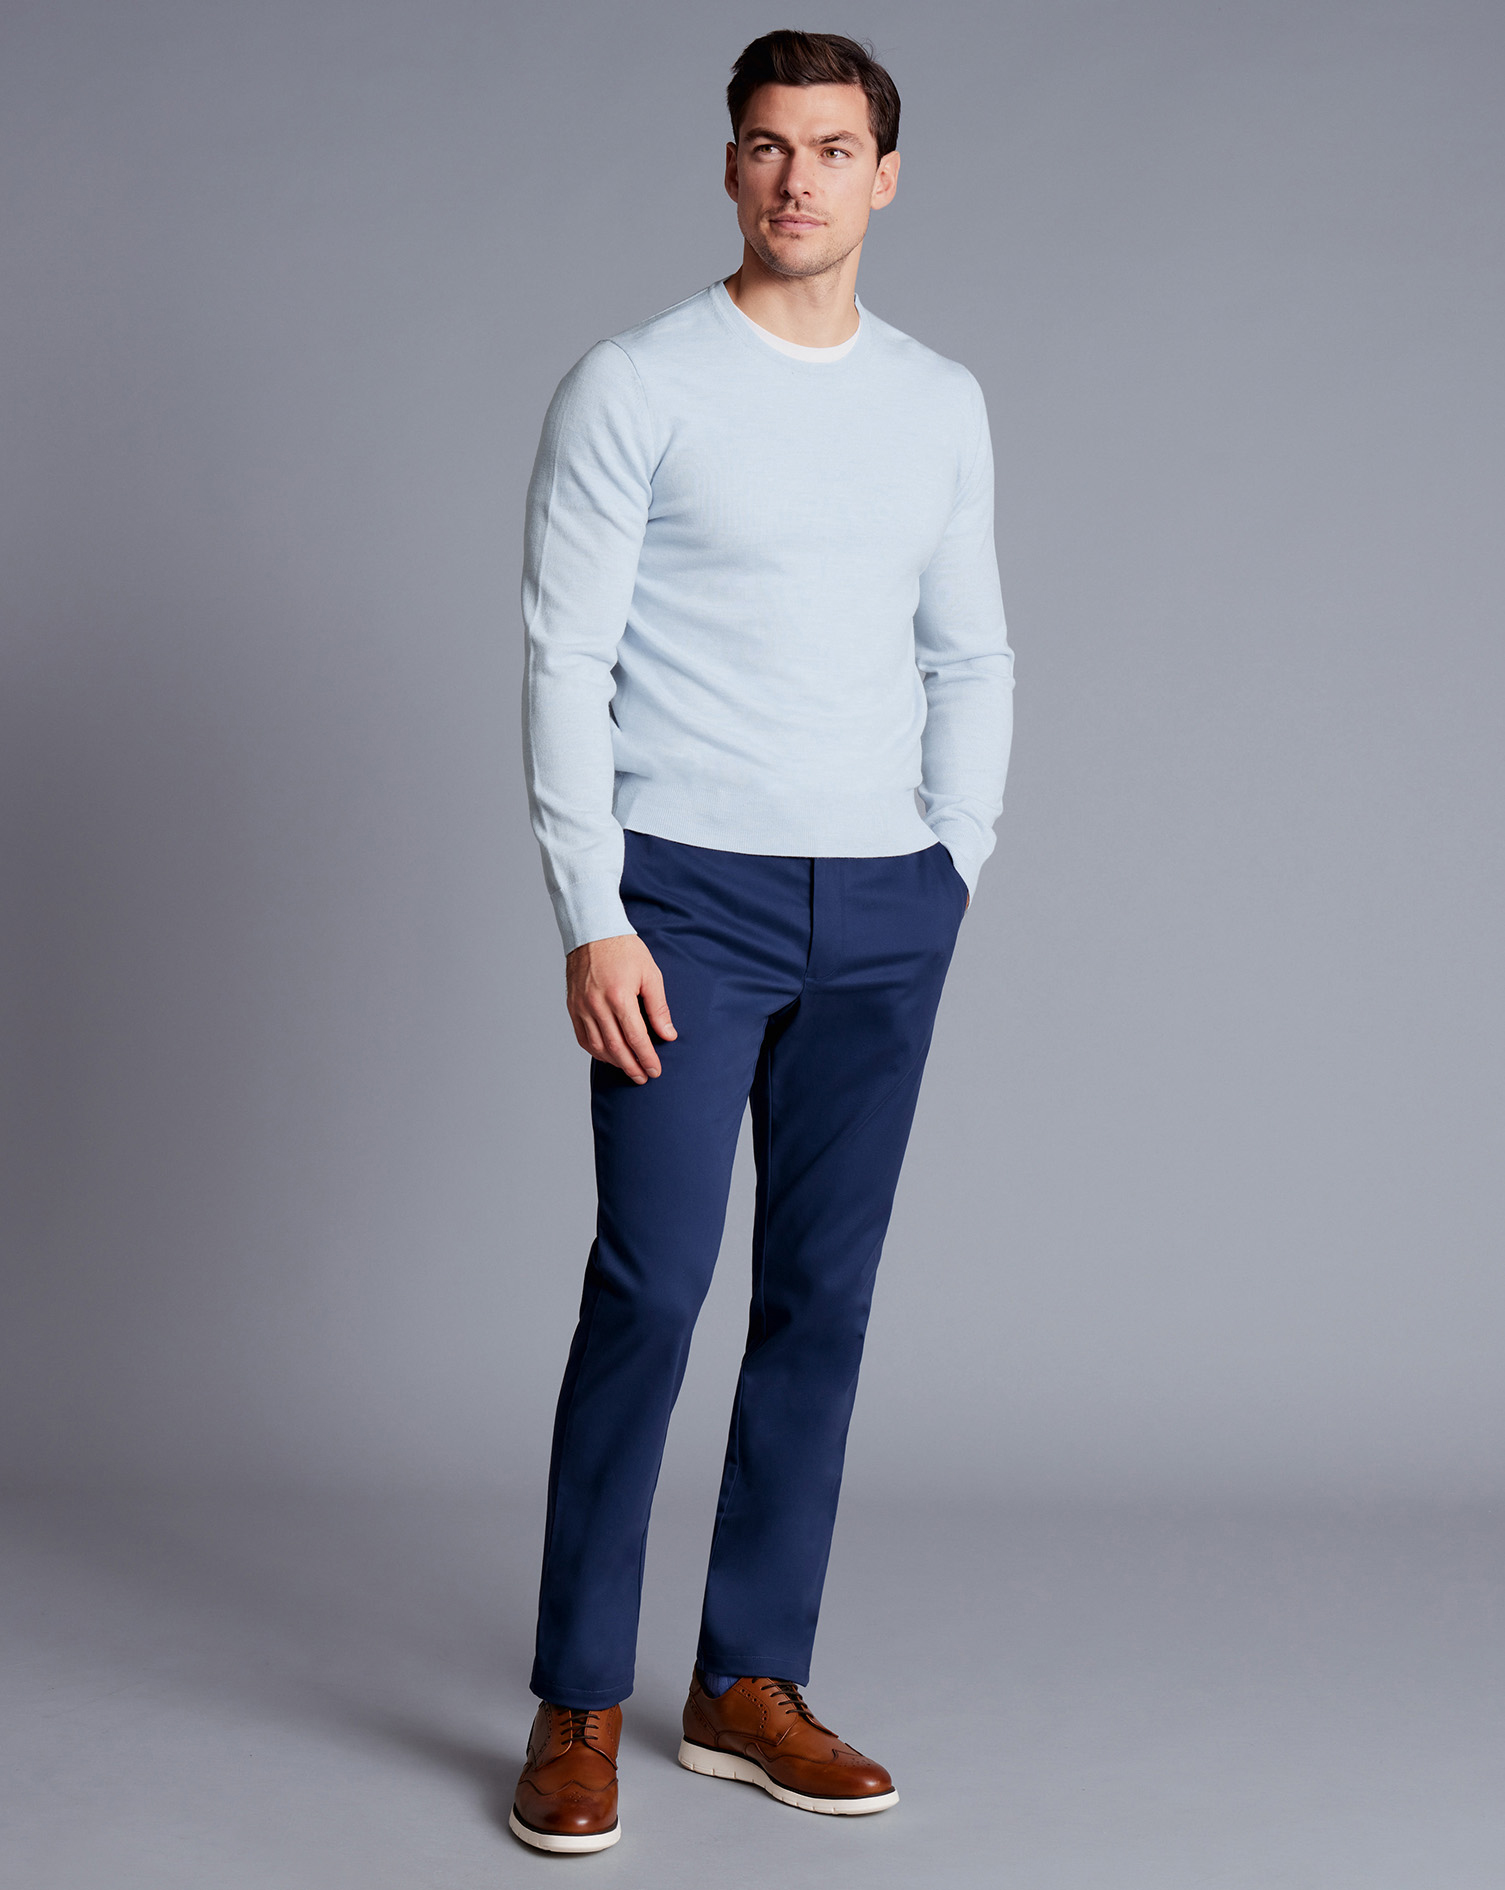 Men's Charles Tyrwhitt Ultimate Non-Iron Chino Pants - Royal Blue Size W42 L38 Cotton
